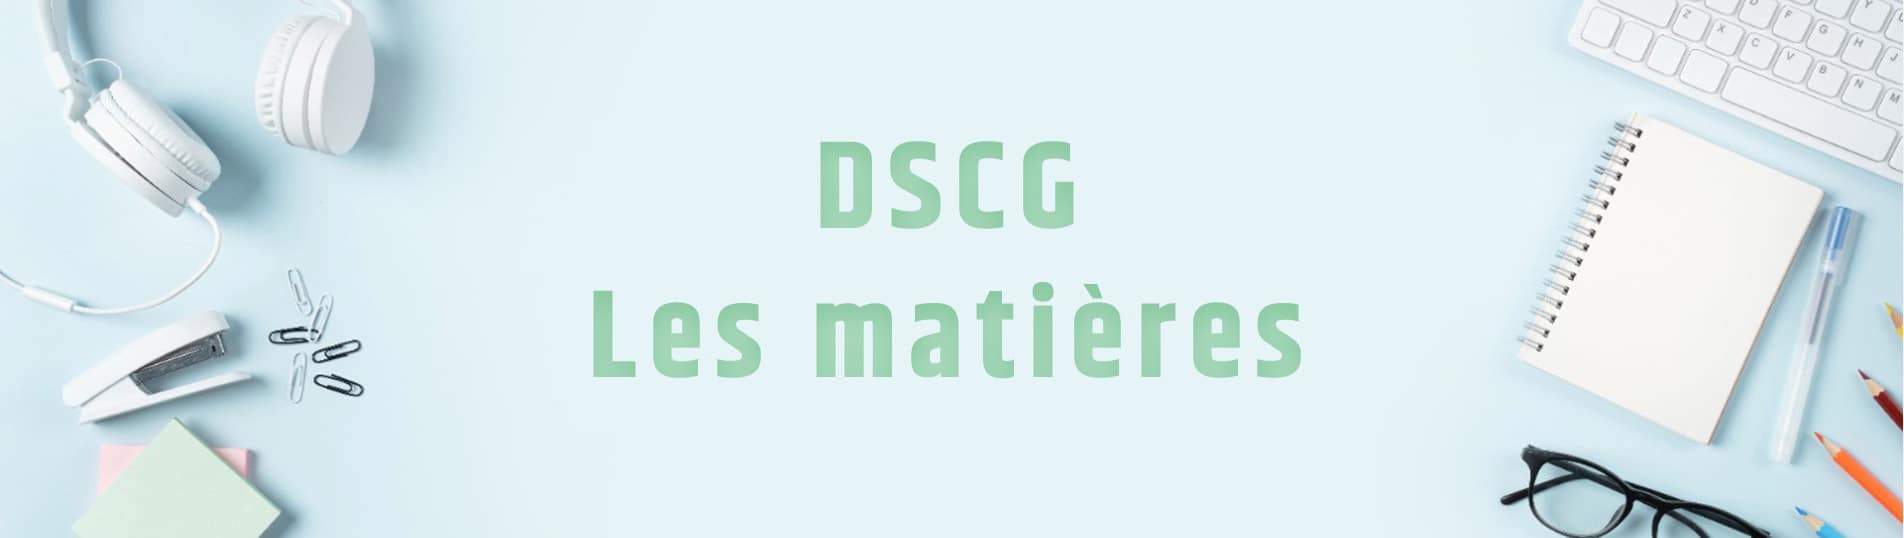 matières DSCG